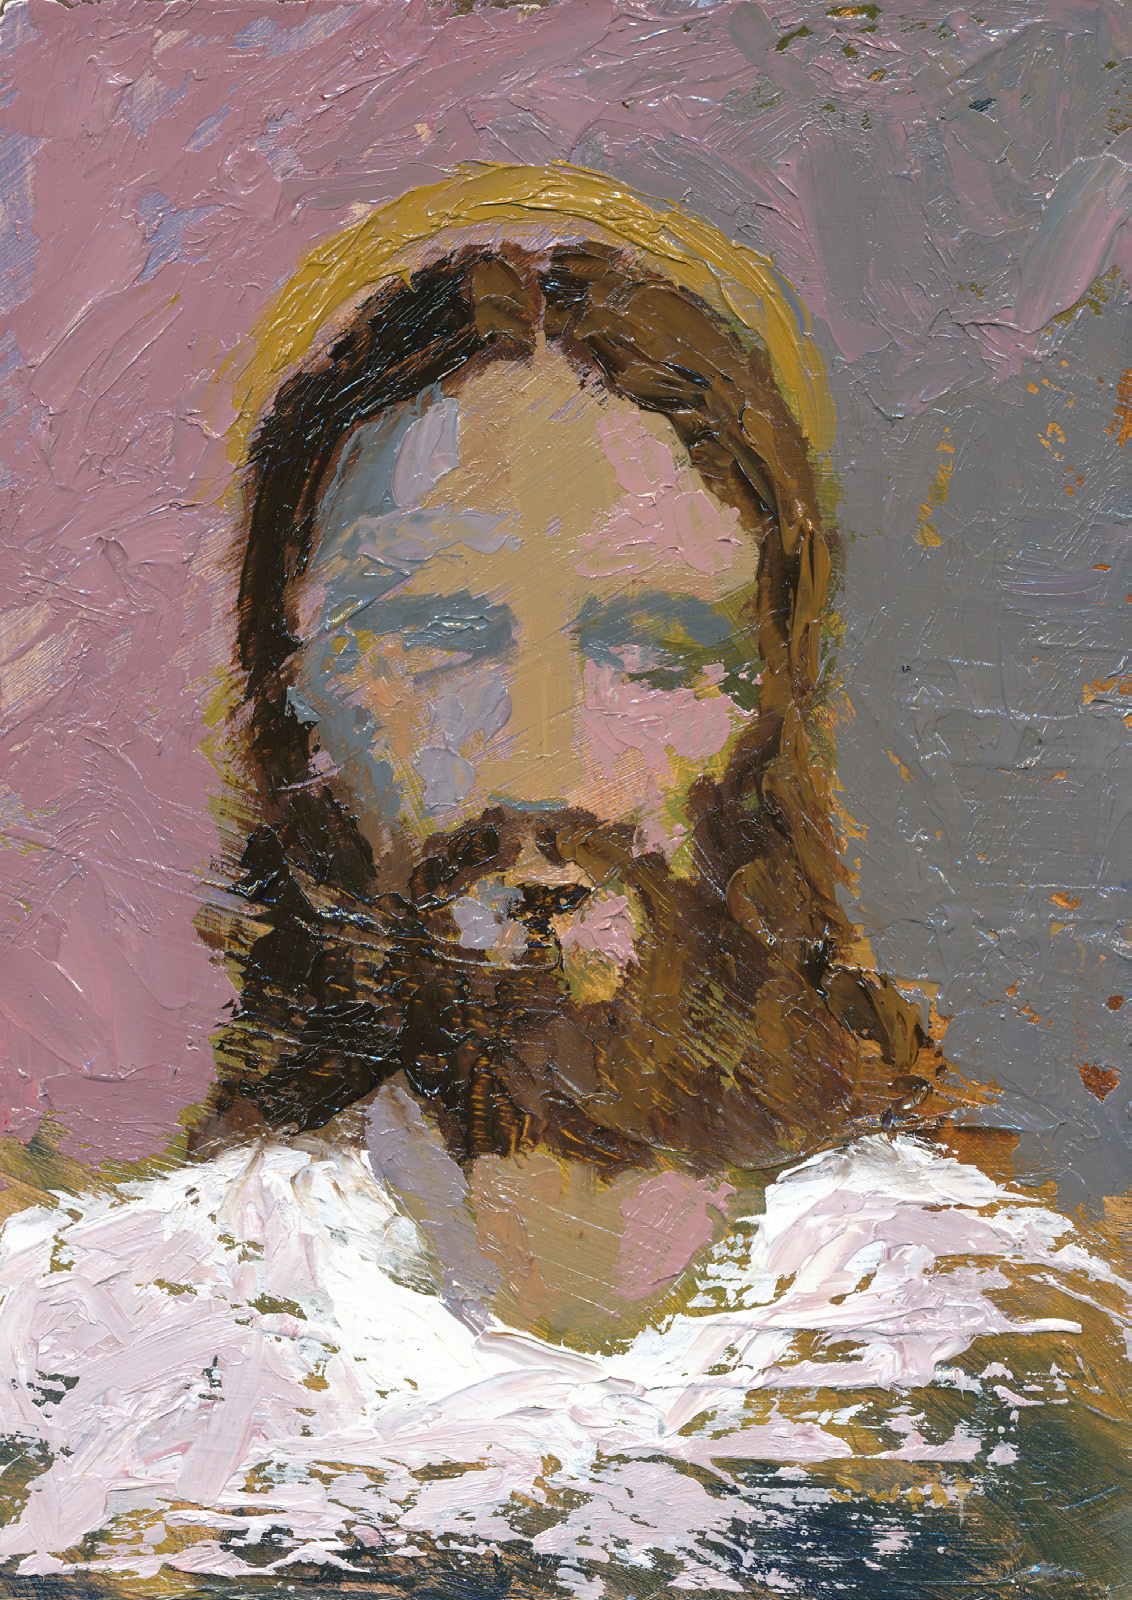 painting of Jesus Christ